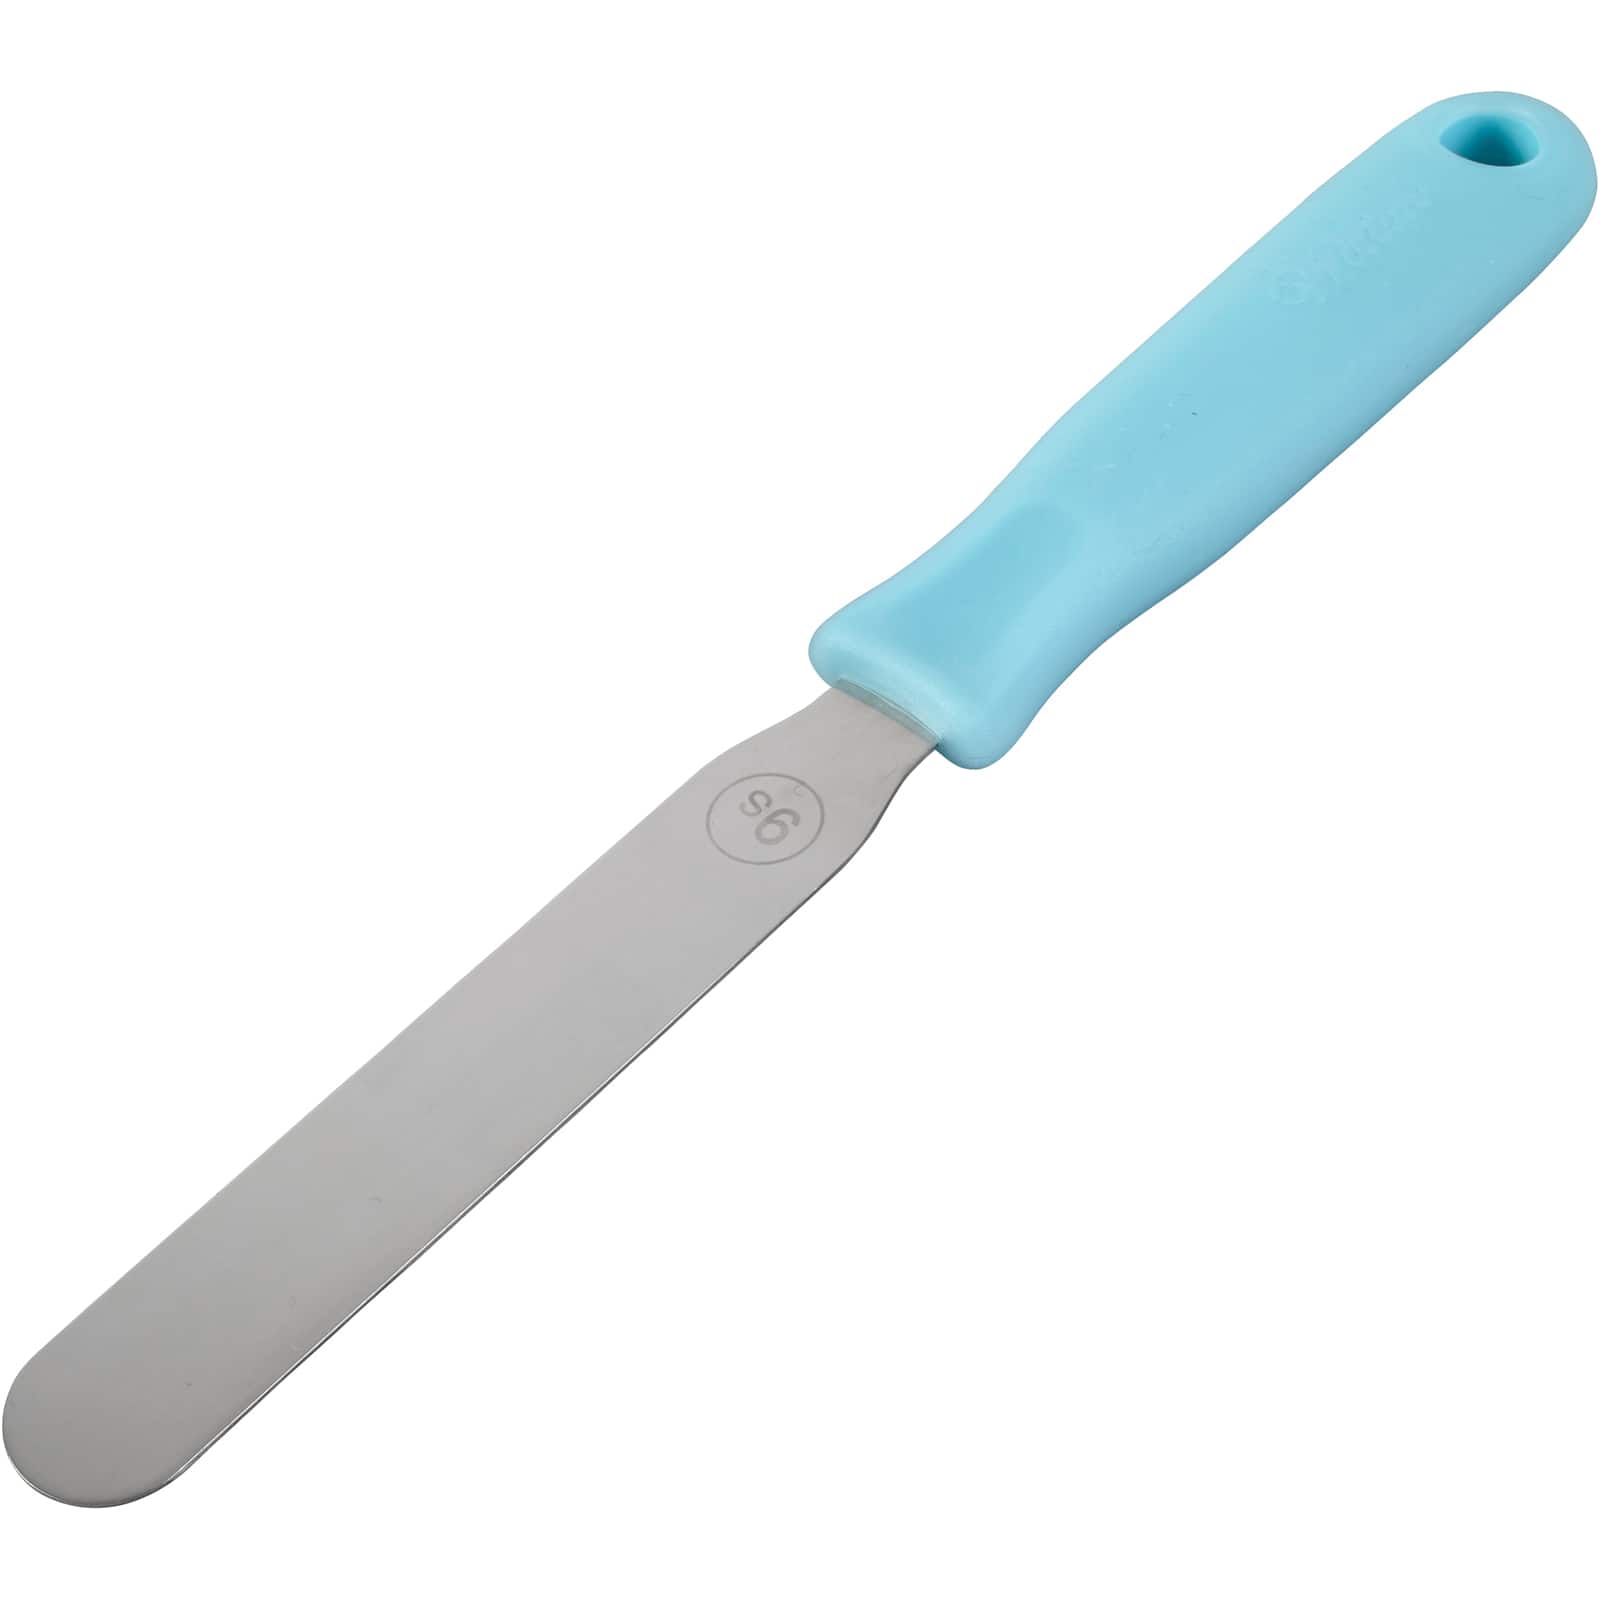 straight spatula